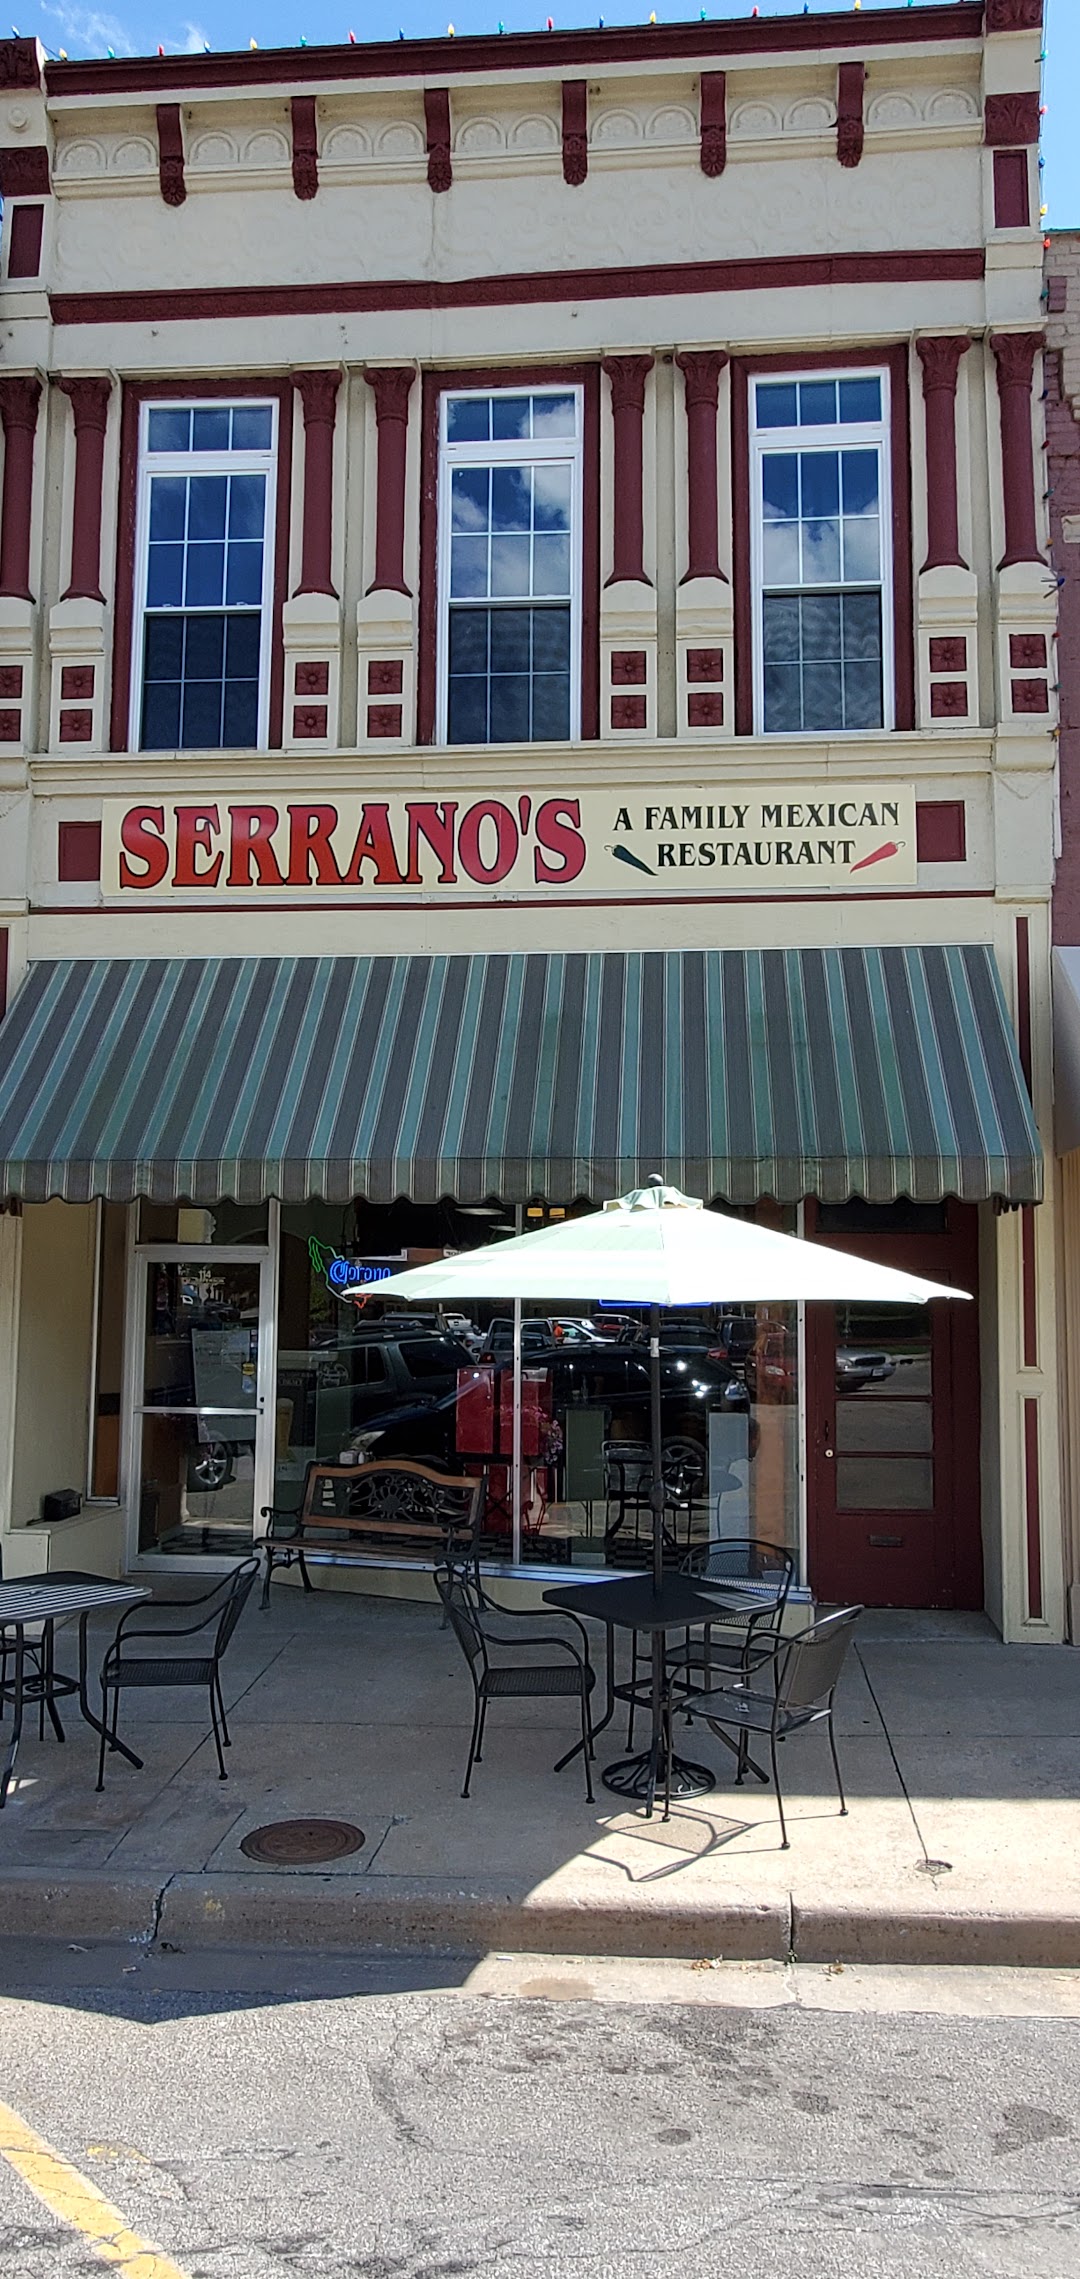 Serranos A Family Mexican Restaurant